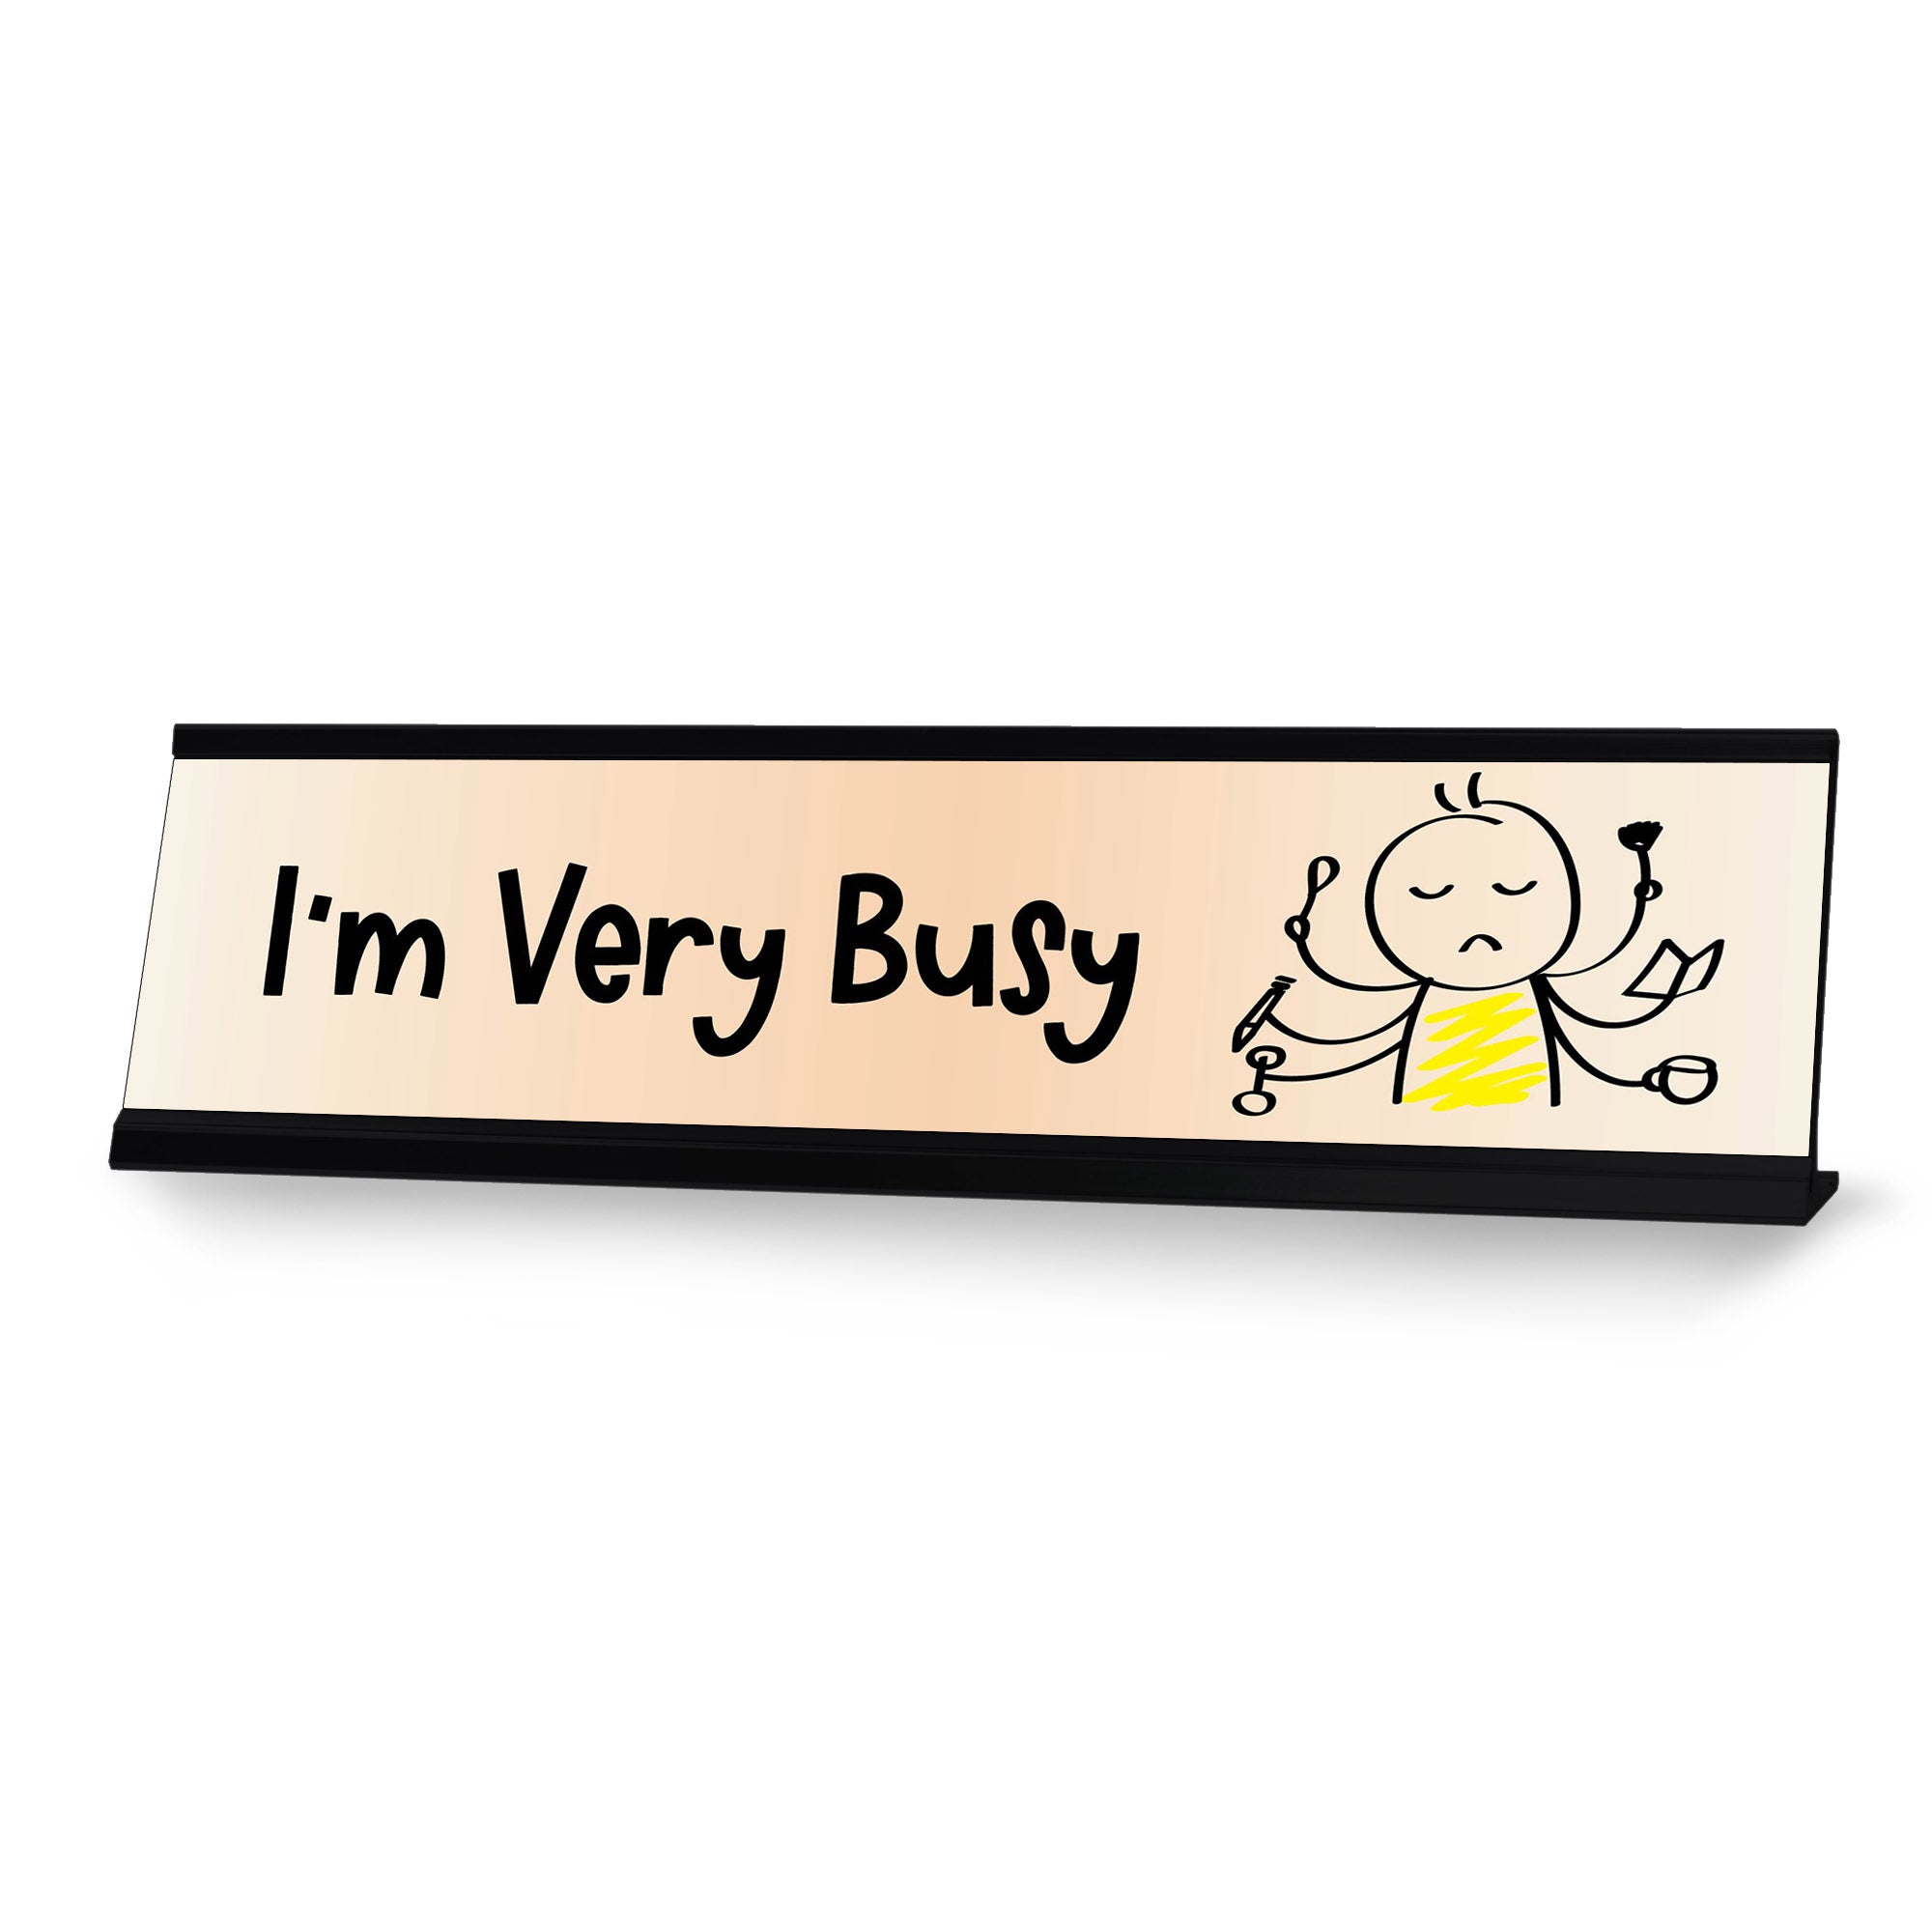 I'm Very Busy Stick, People Desk Sign, Novelty Nameplate (2 x 8")